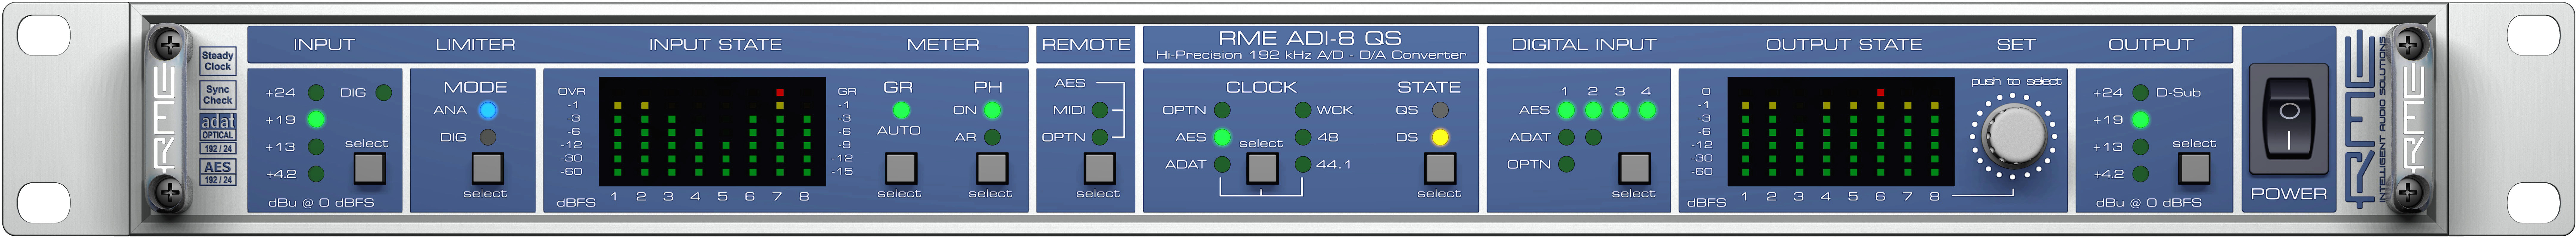 RME ADI-8 QS Front Panel 